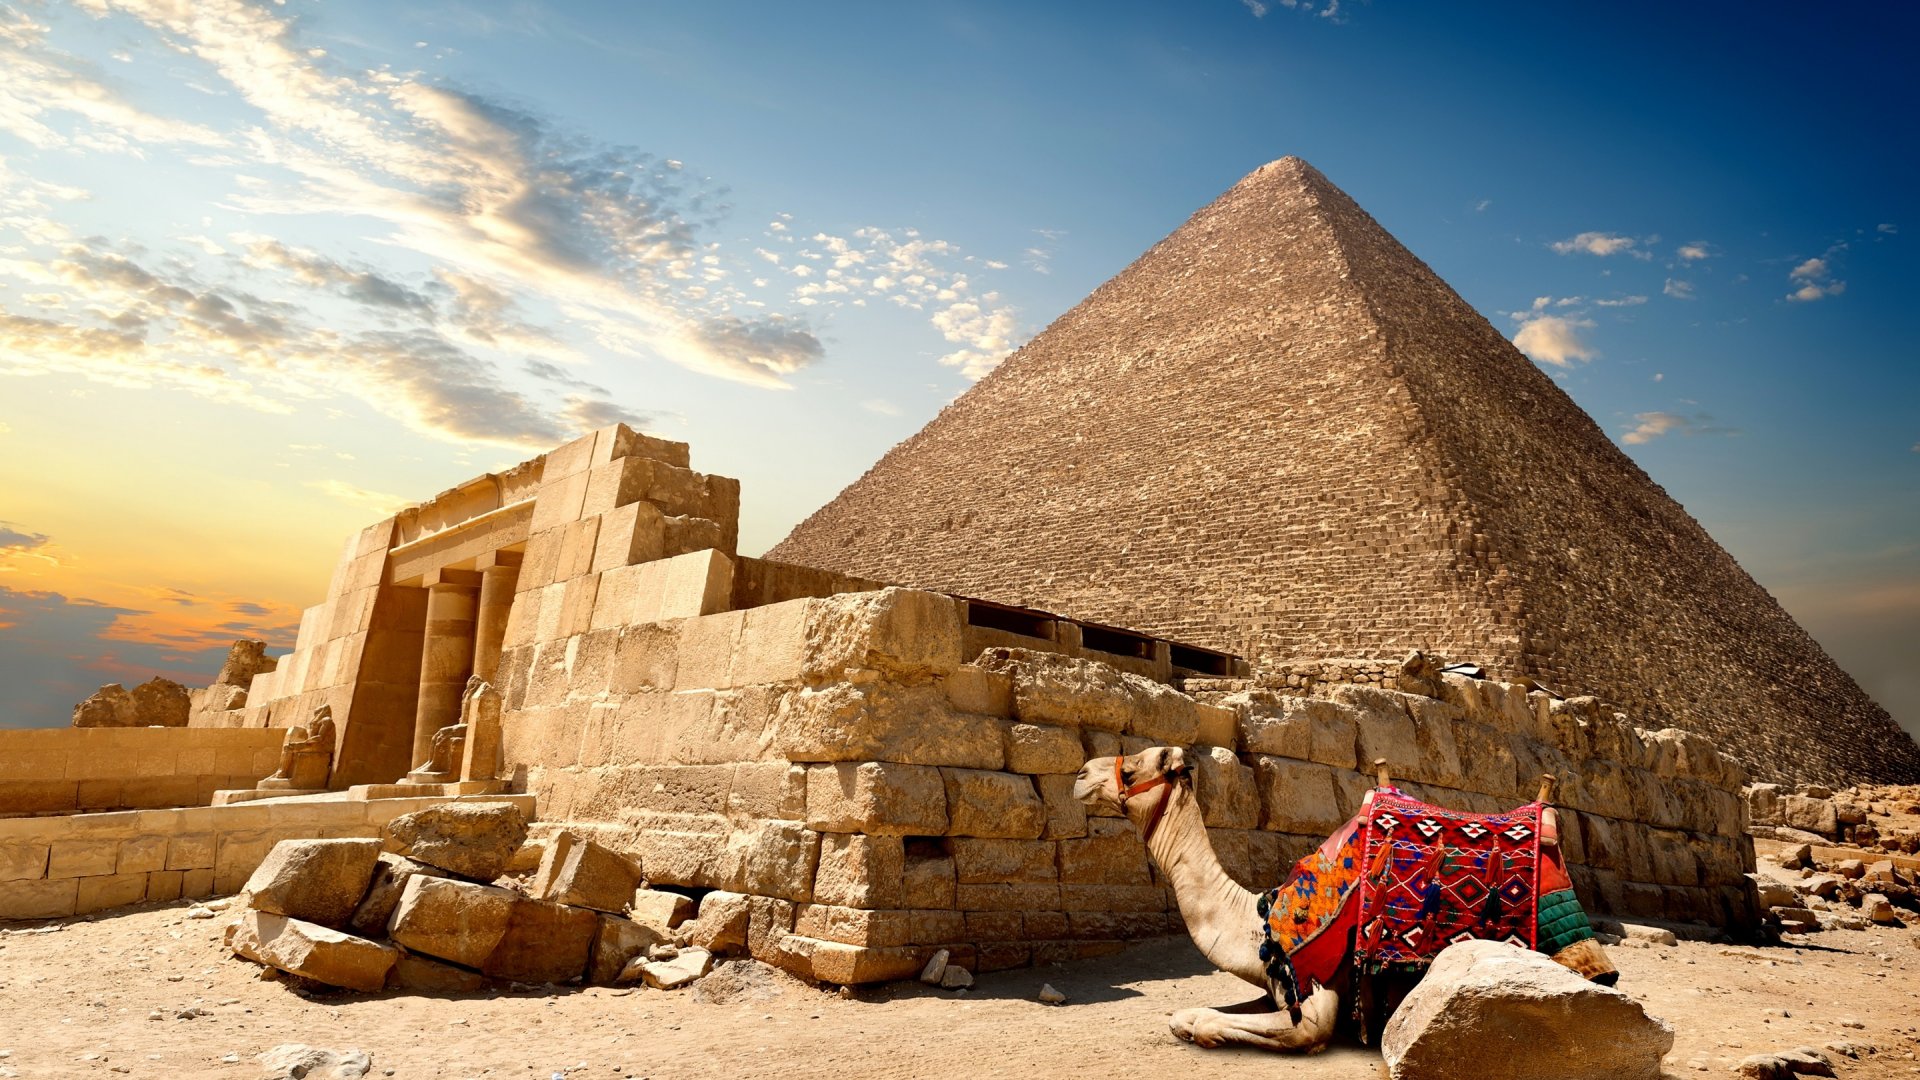 316-3160529_cairo-clouds-sand-egypt-desert-pyramid-national-geographic.jpg